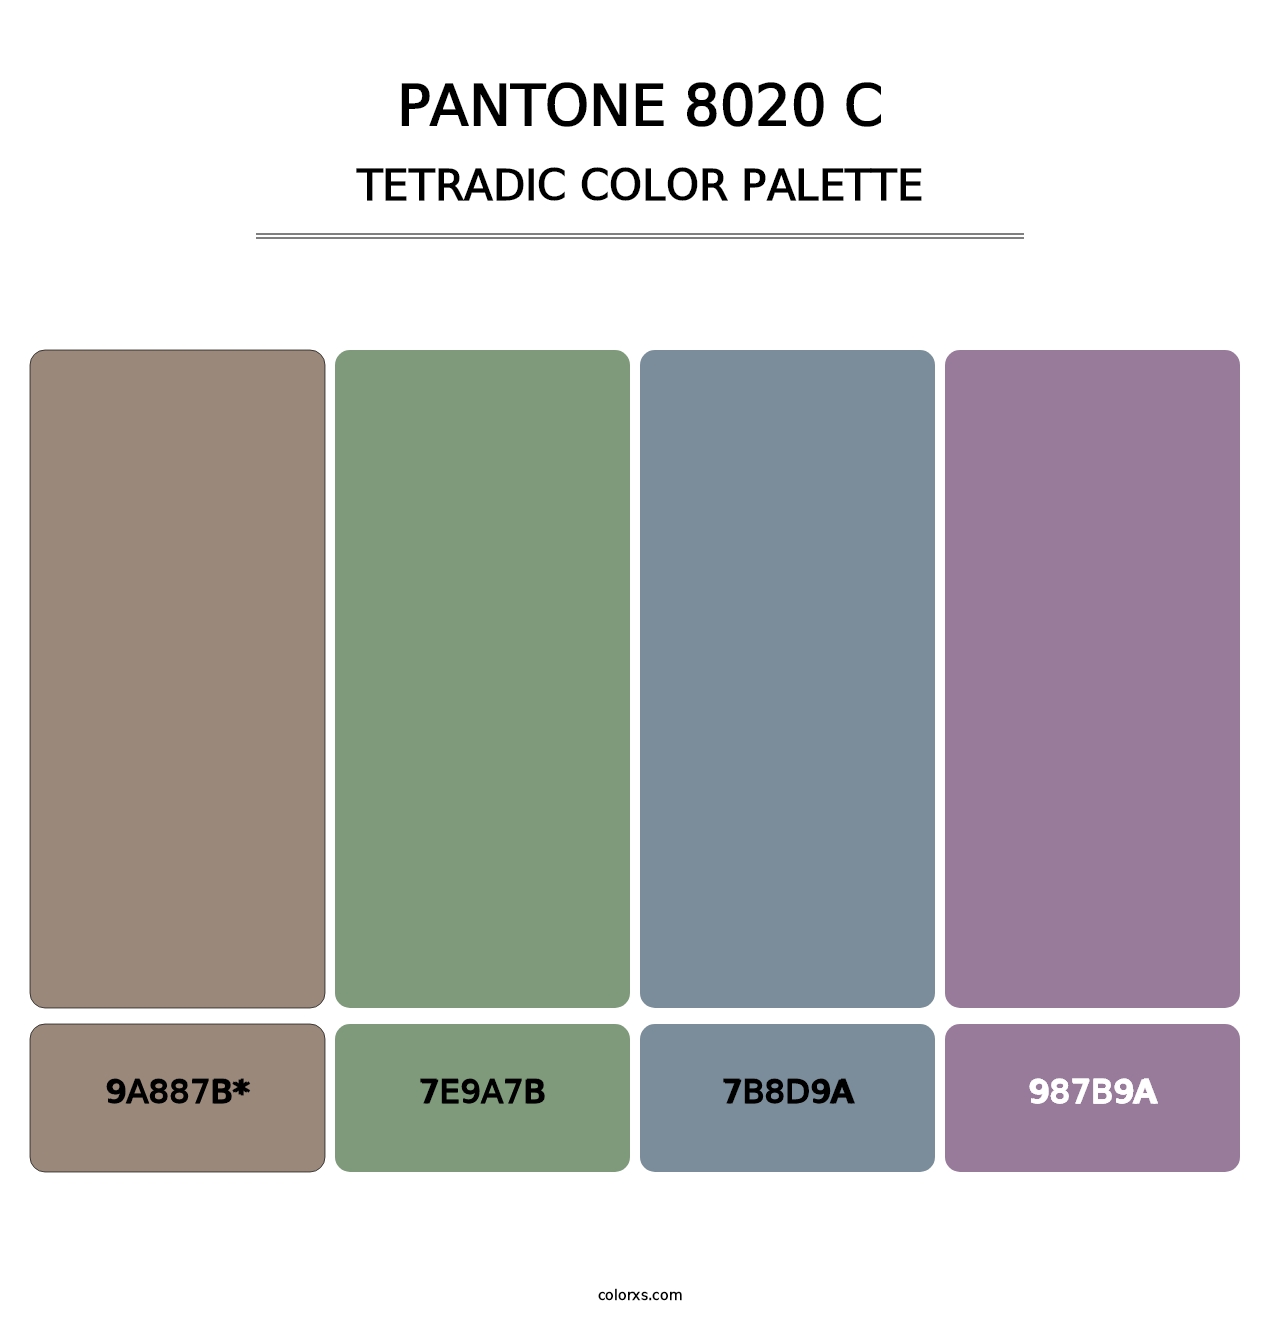 PANTONE 8020 C - Tetradic Color Palette